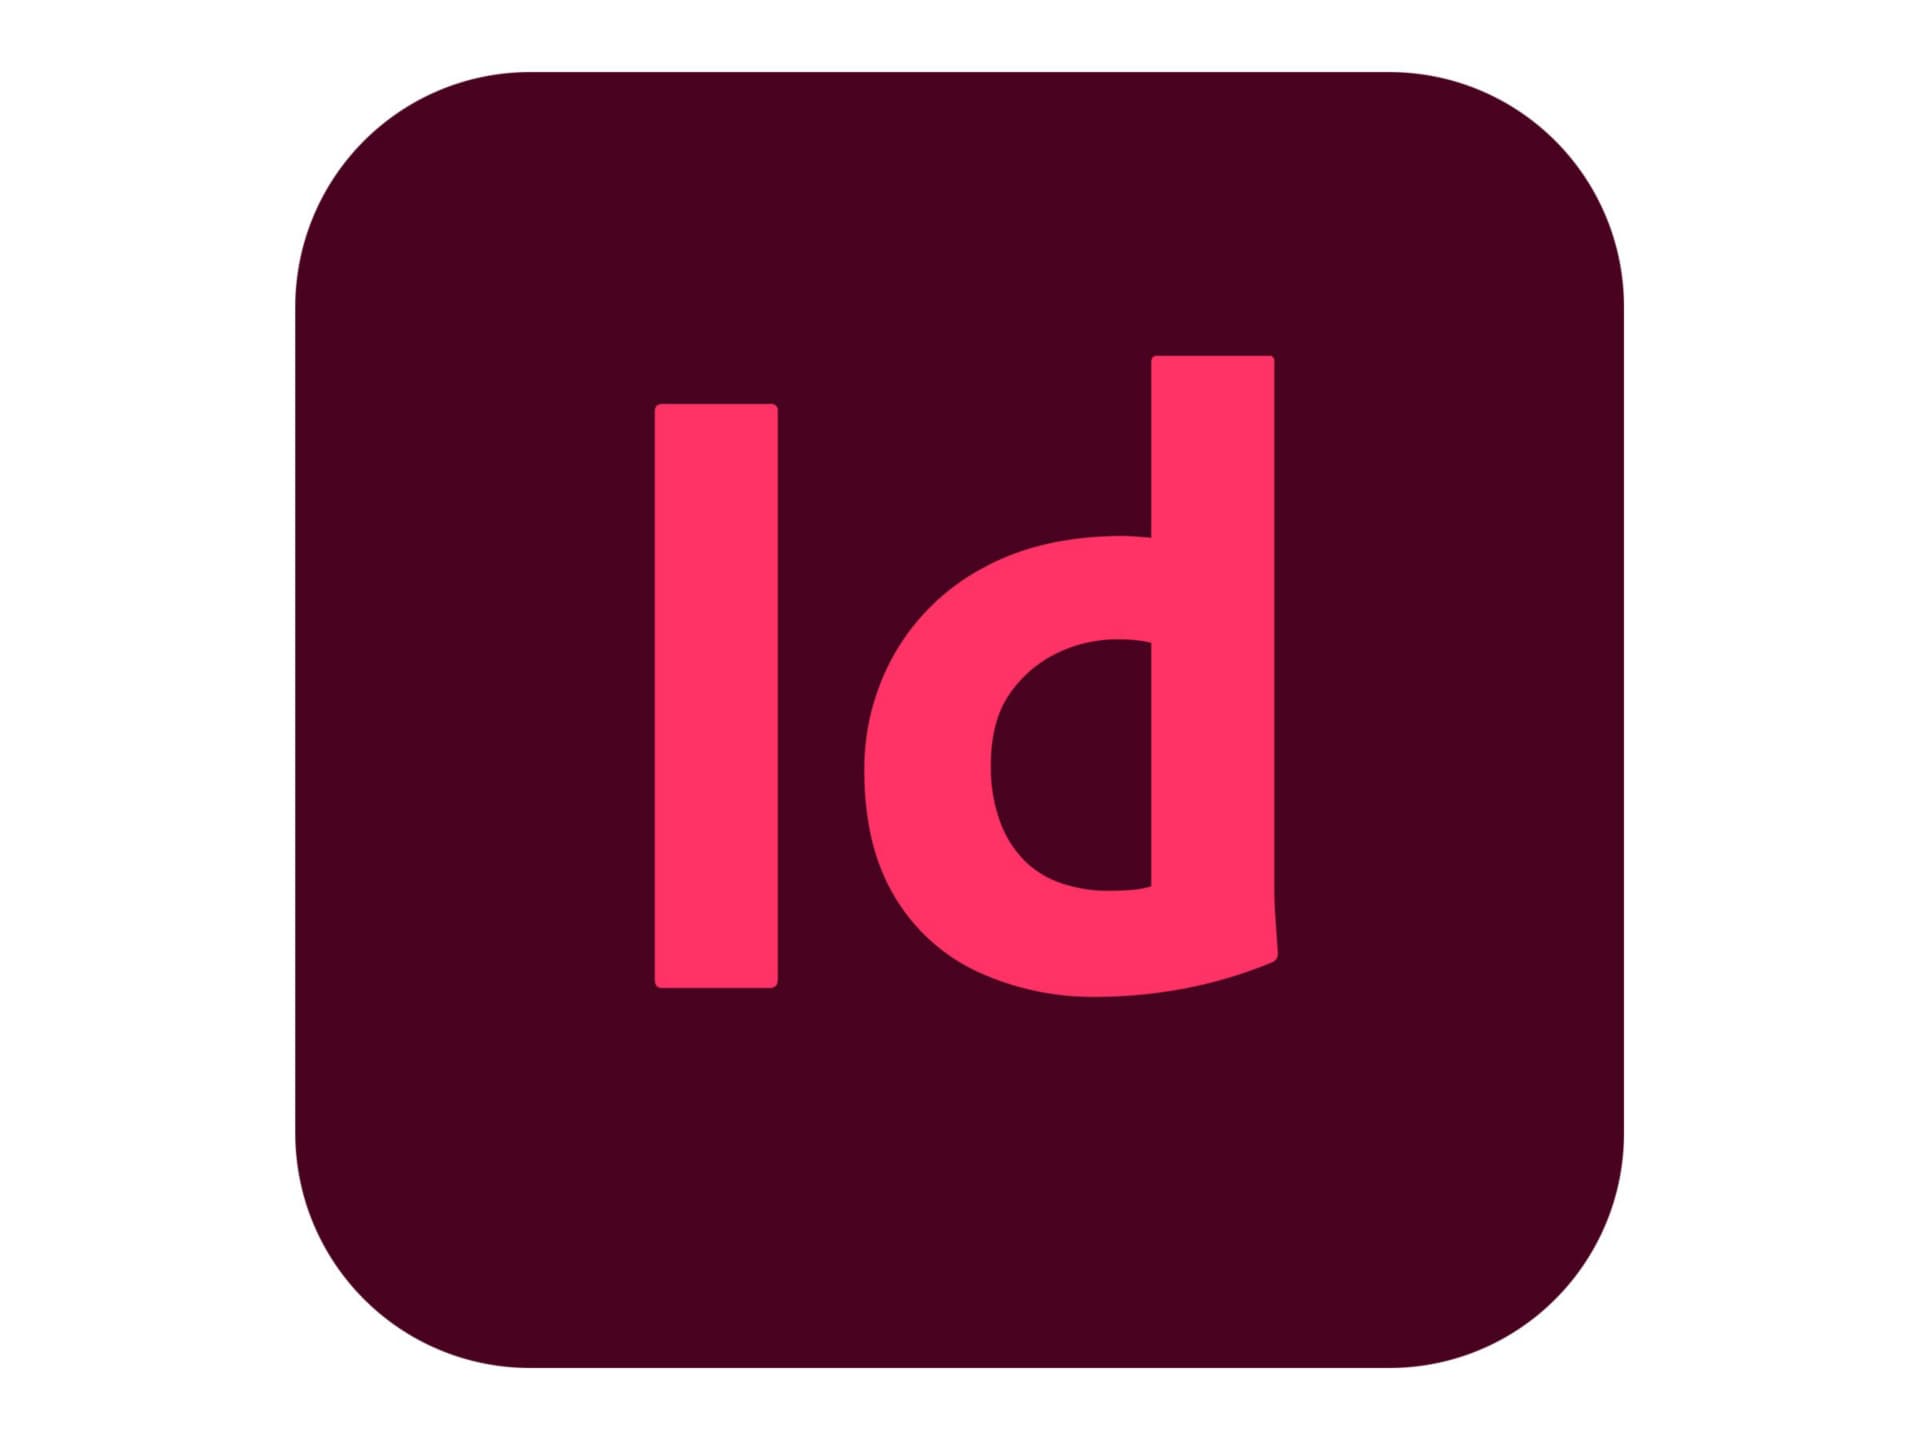 Adobe InDesign CC for teams - Subscription Renewal - 1 named user